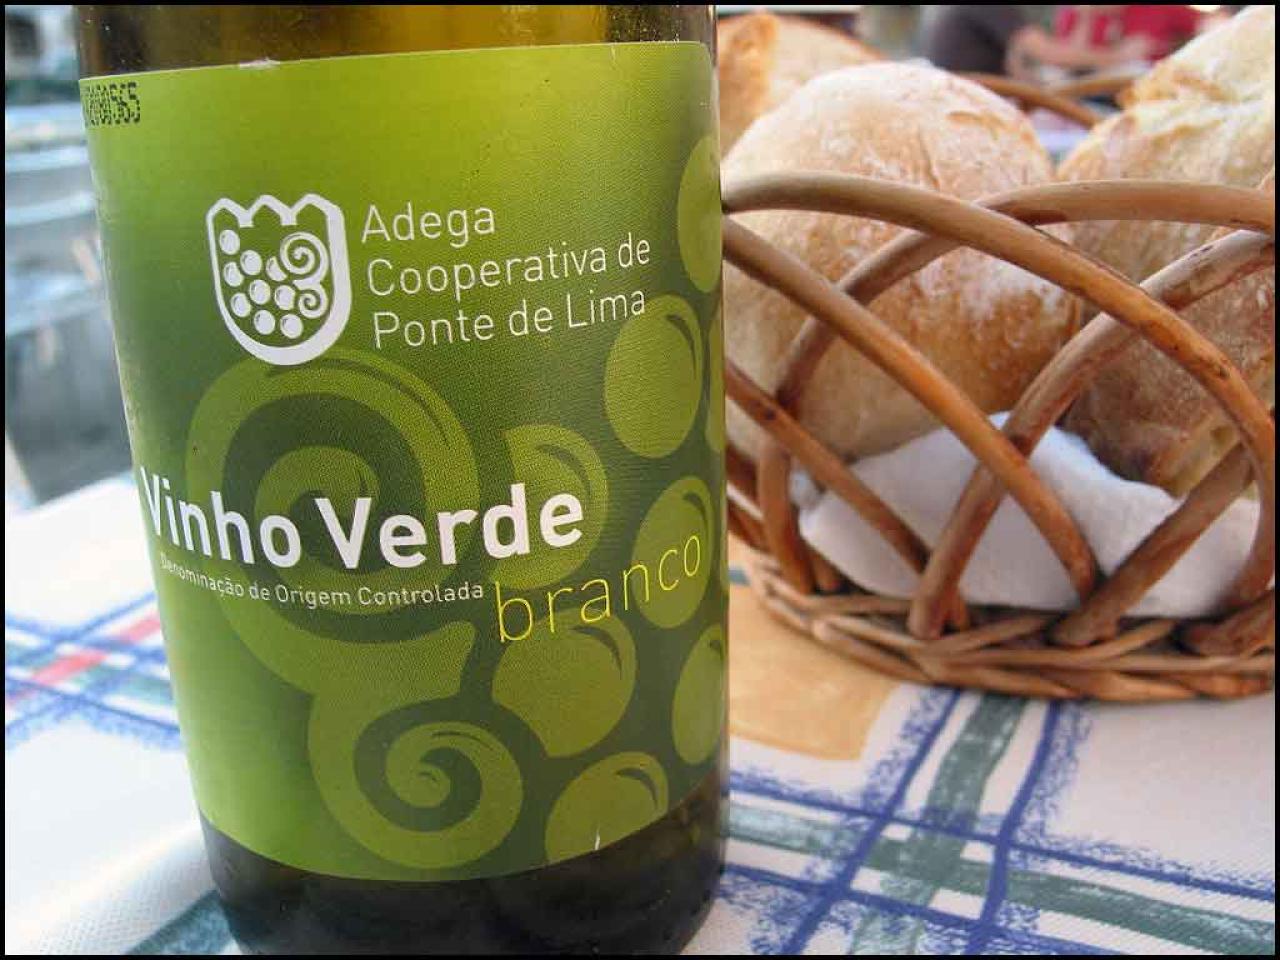 Vinho Verde literally translates to “Green Wine”.